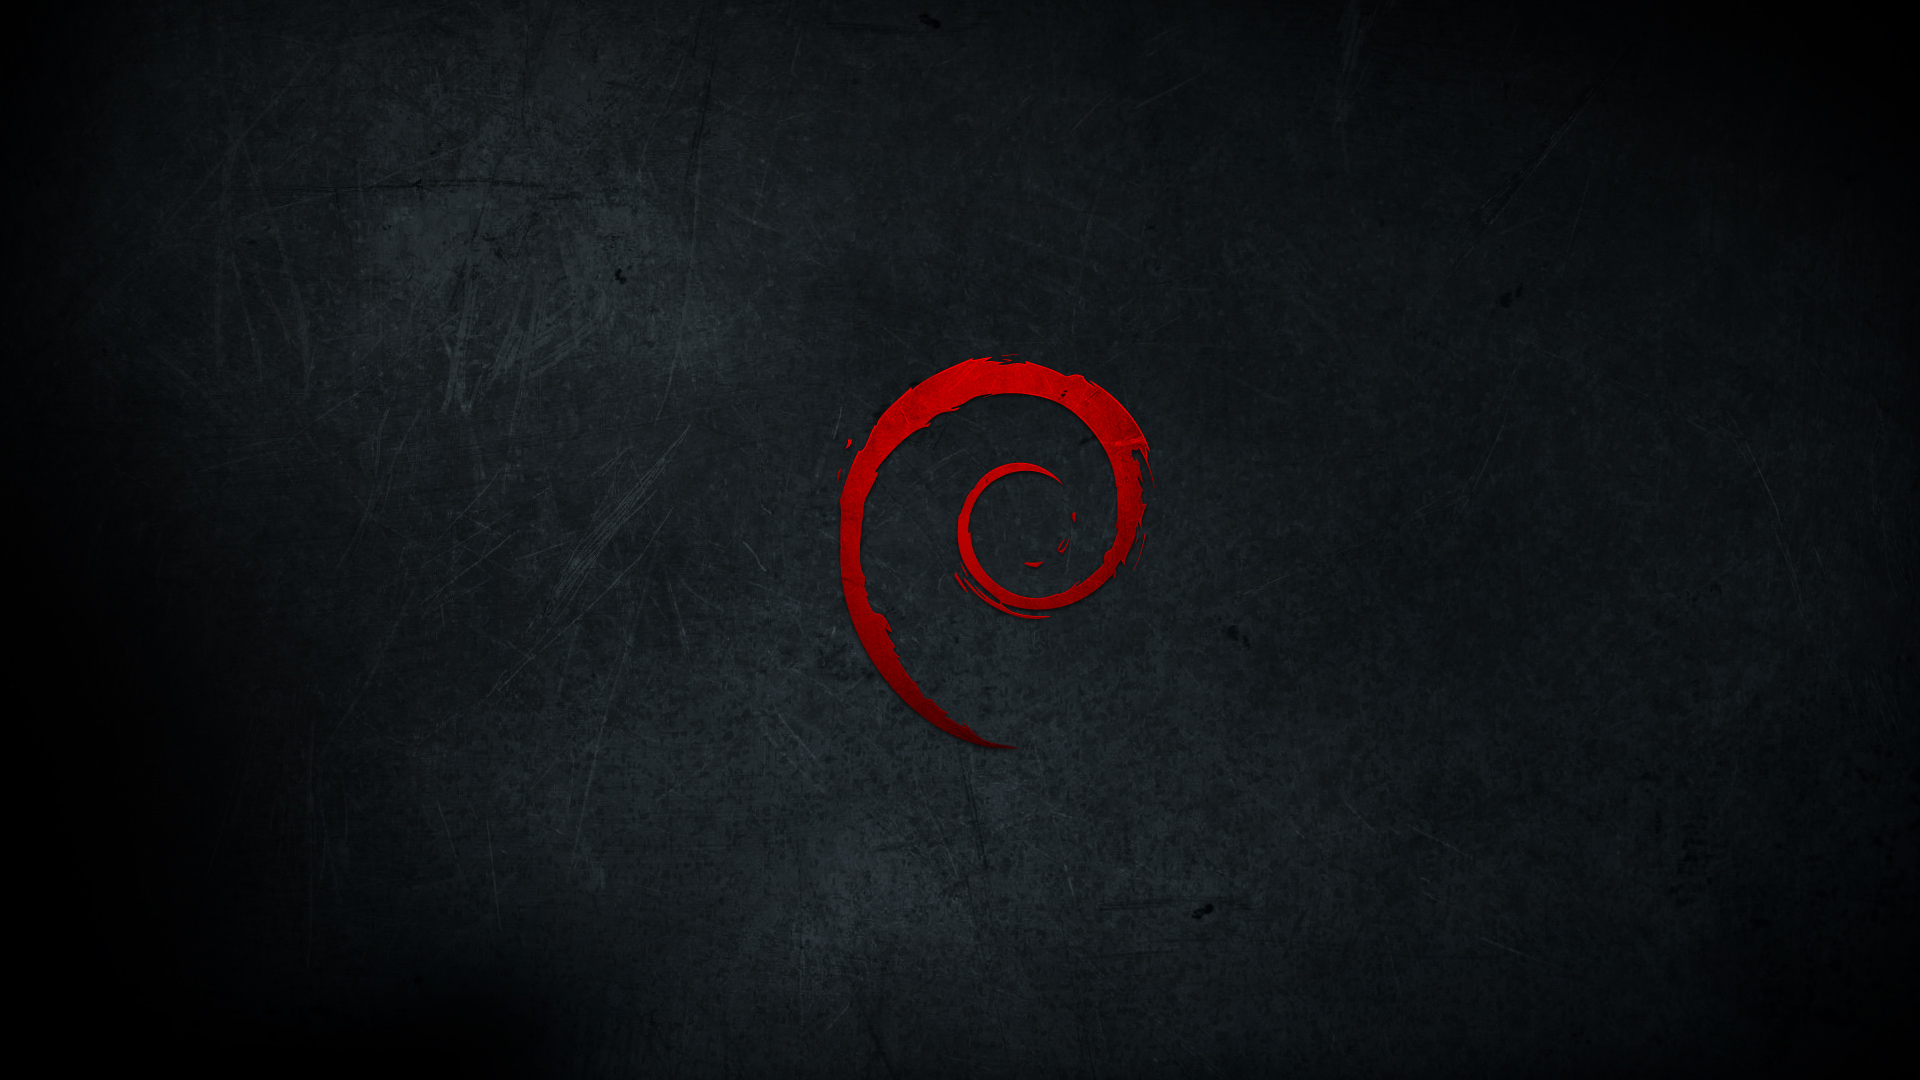 Debian Wallpaper For Your Desktop